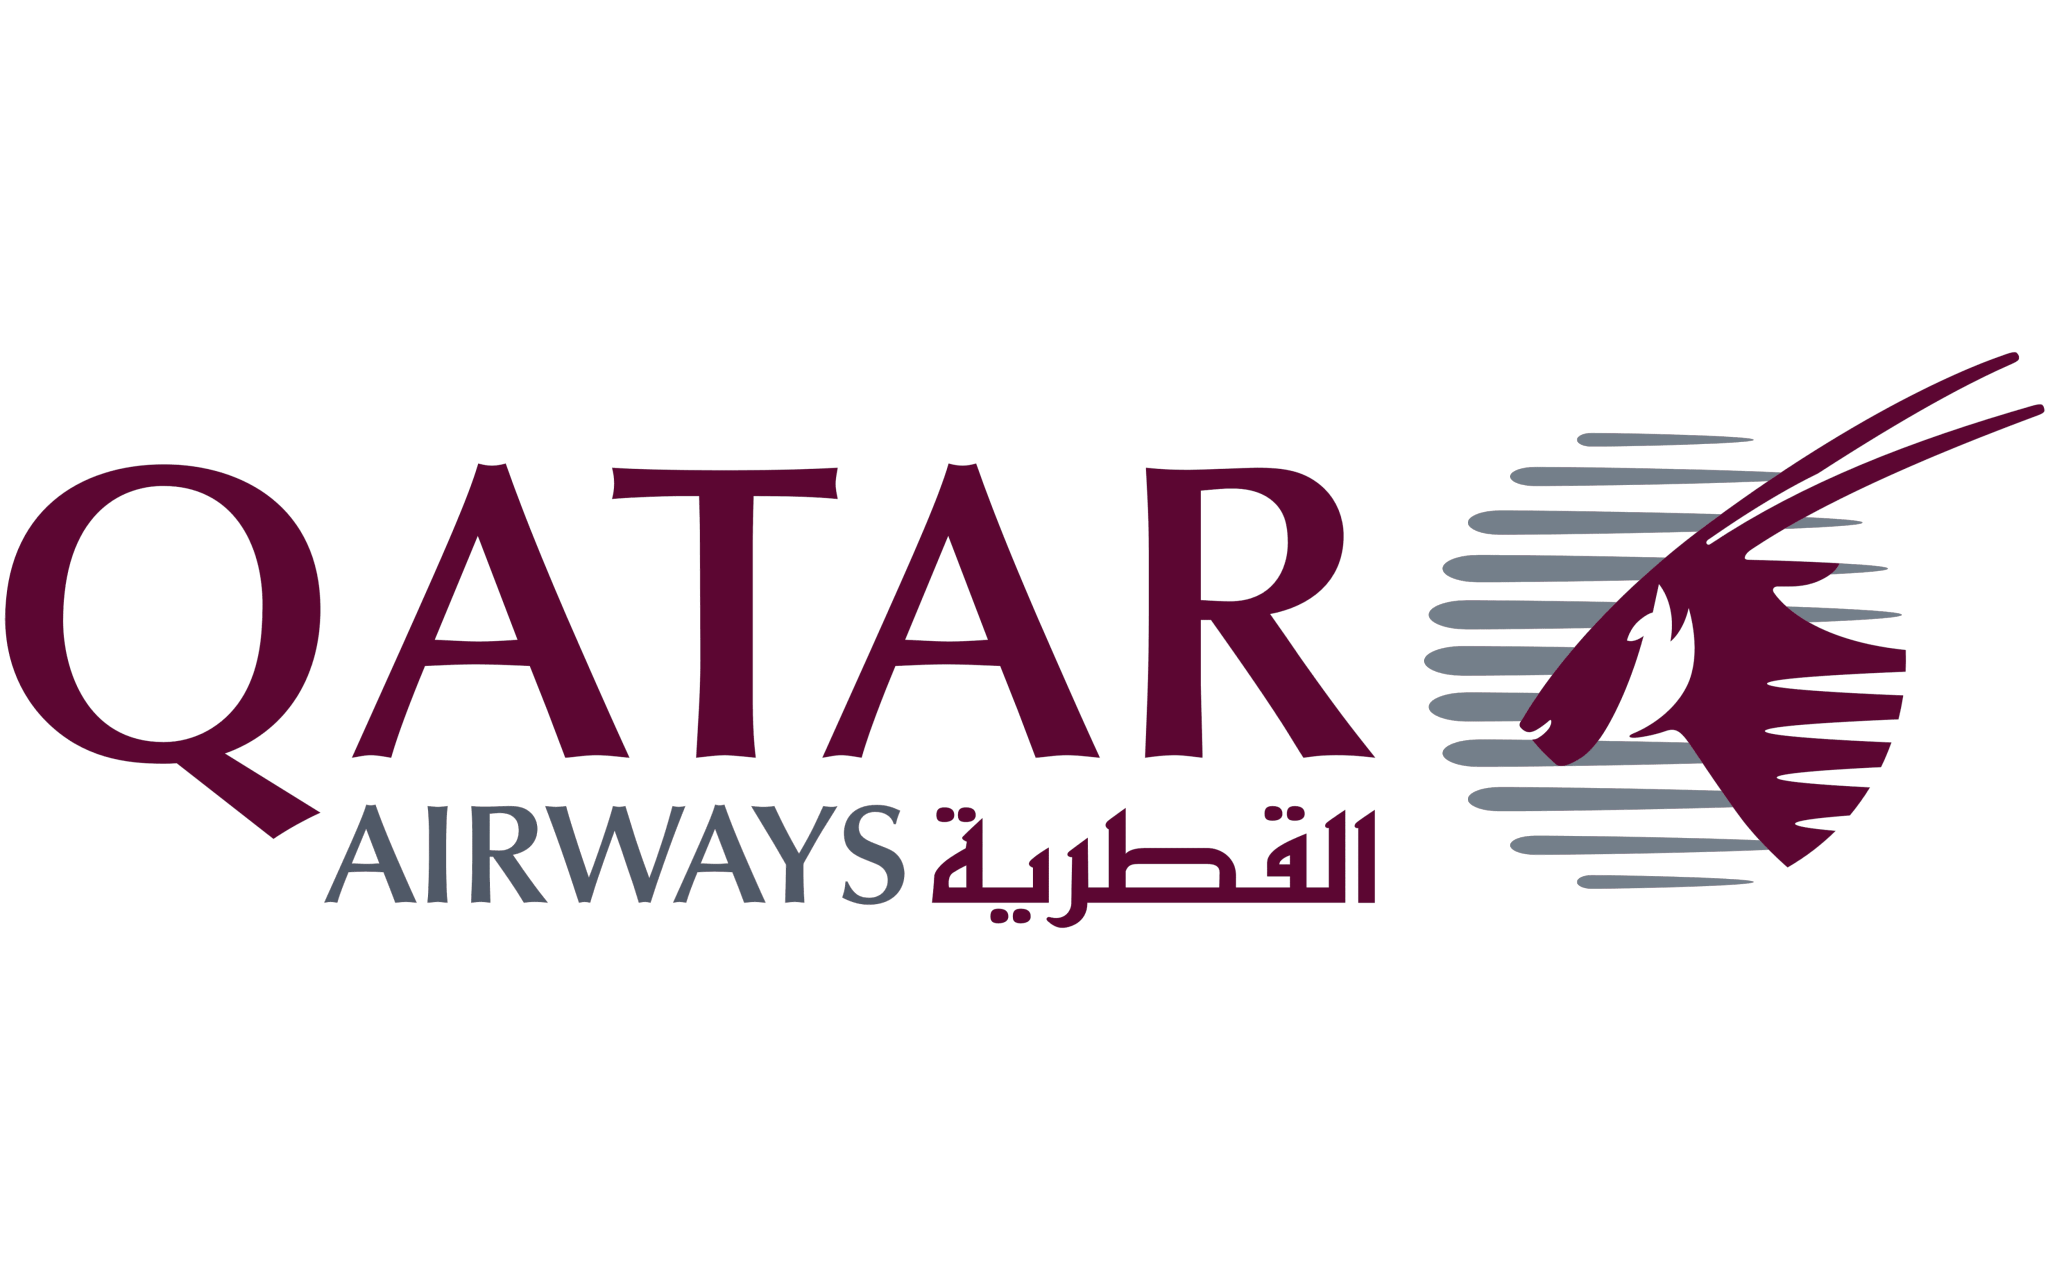 Logo de la aerolínea